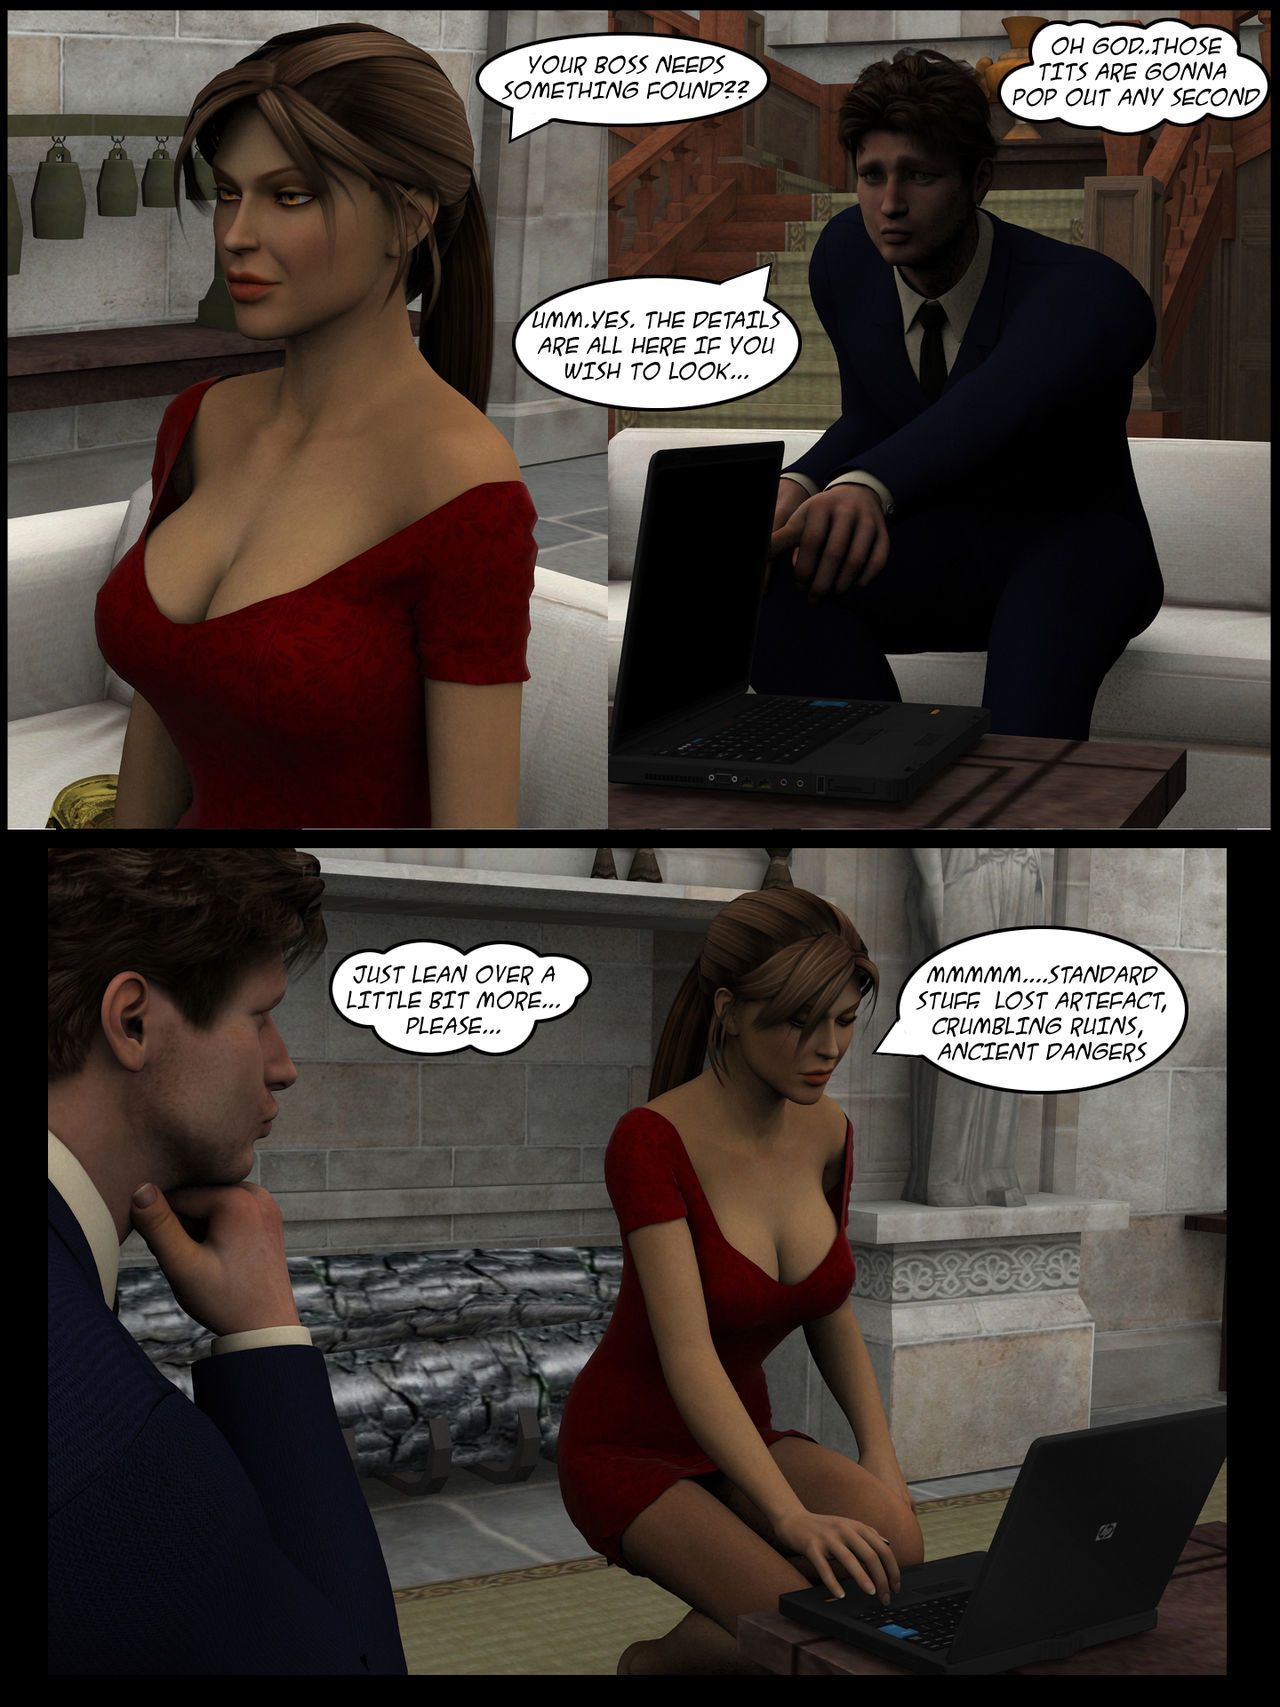 Lara Croft D Bande dessinée - la négociation